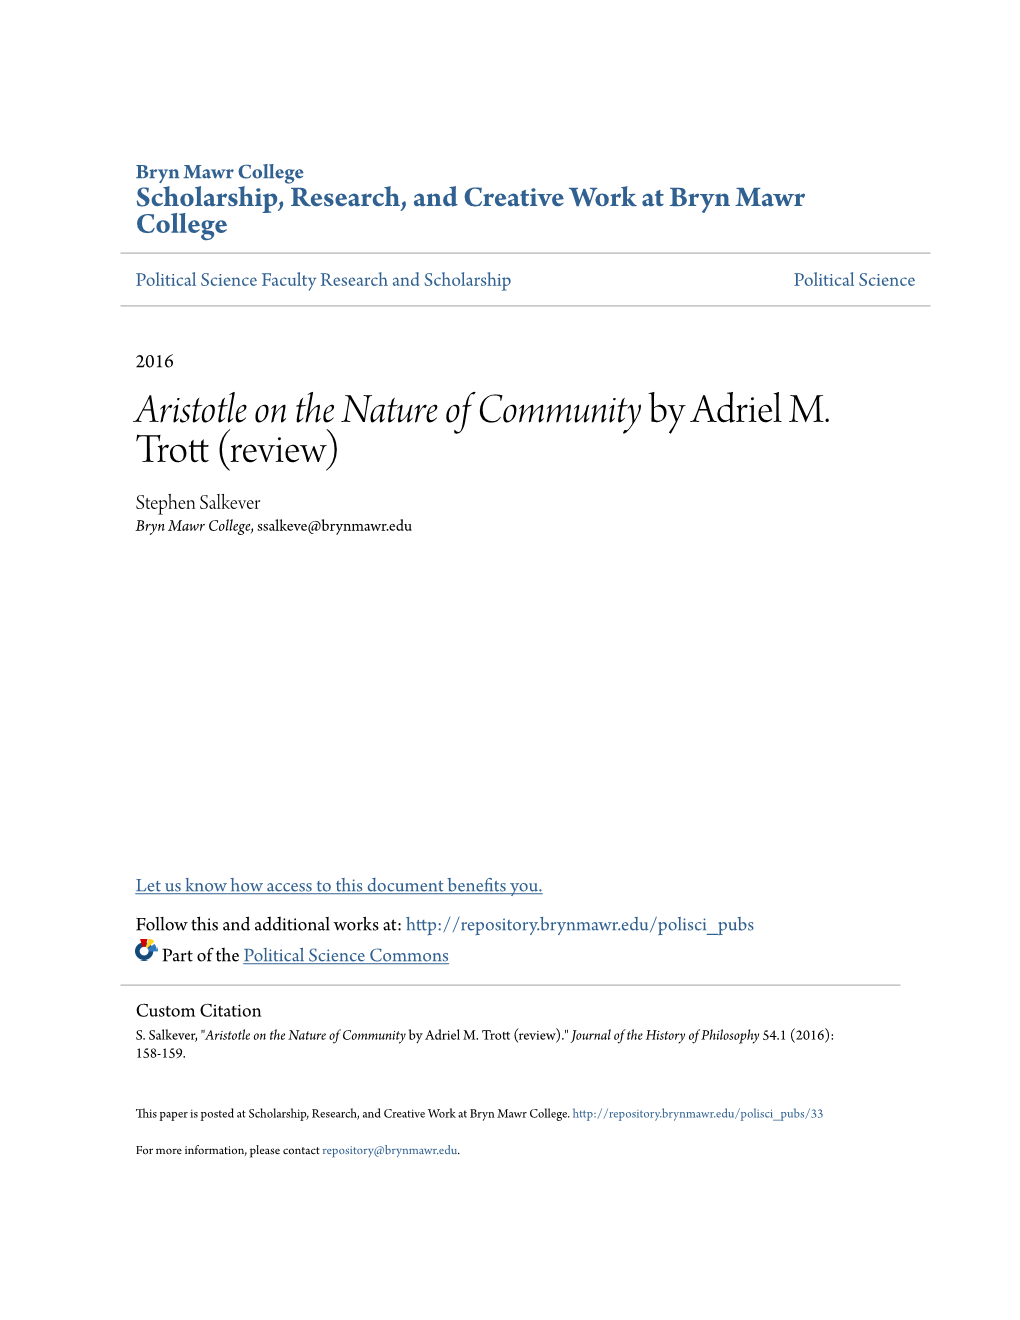 Aristotle on the Nature of Community by Adriel M. Trott R( Eview) Stephen Salkever Bryn Mawr College, Ssalkeve@Brynmawr.Edu